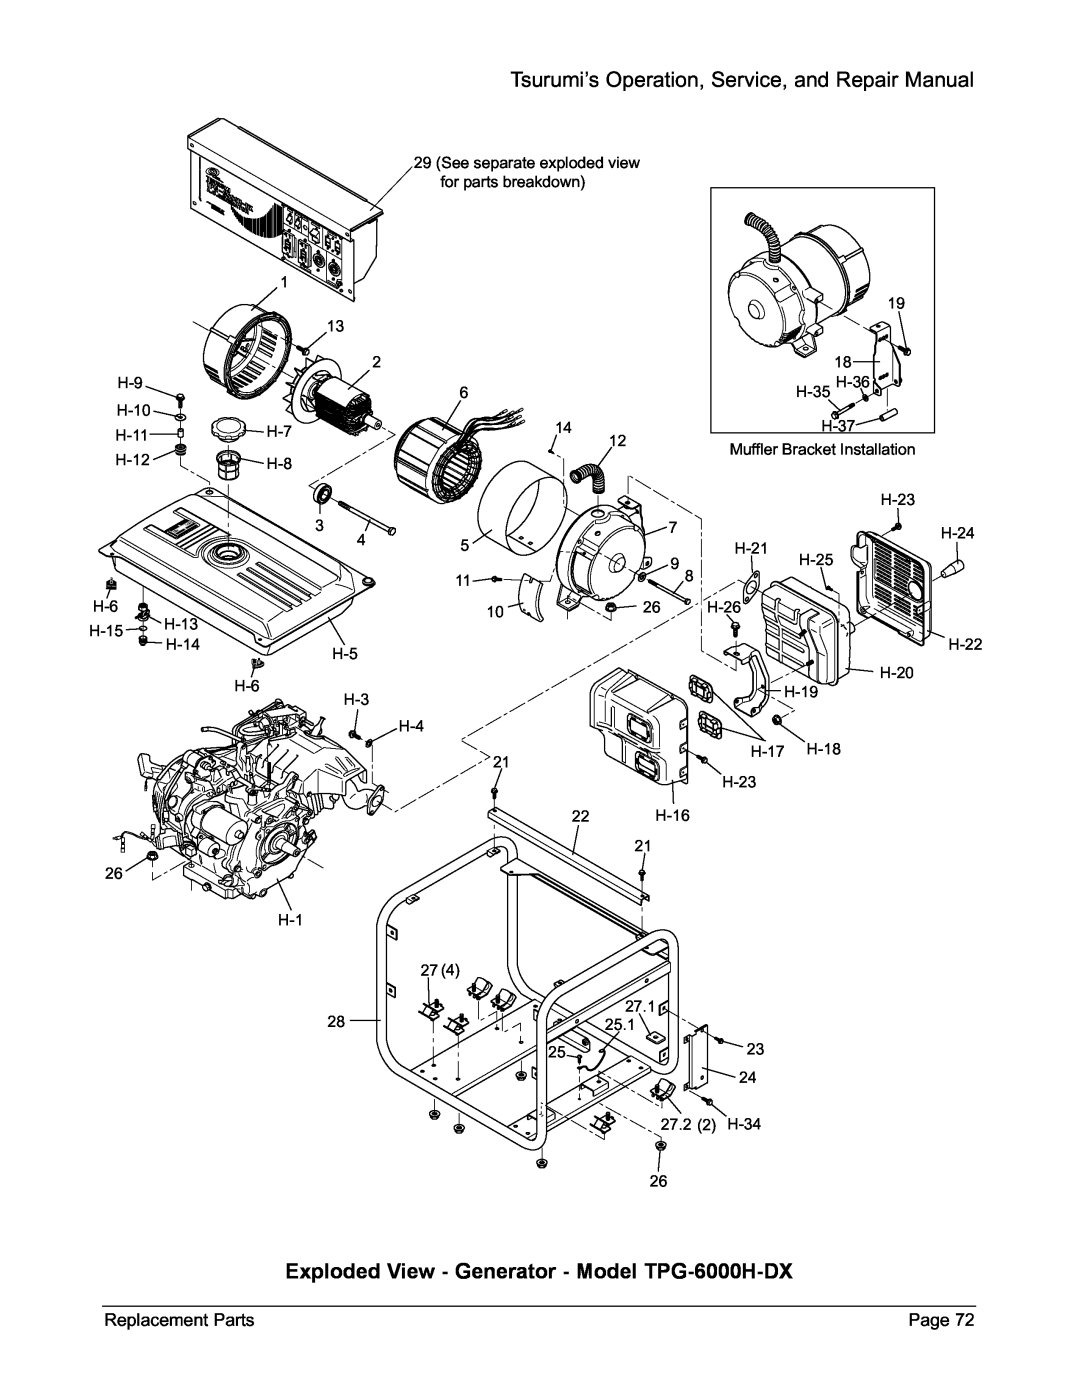 Honda Power Equipment TPG-4300H-DX, TPG-2900H-DX, TPG-7000H-DXE manual Tsurumi’s Operation, Service, and Repair Manual 